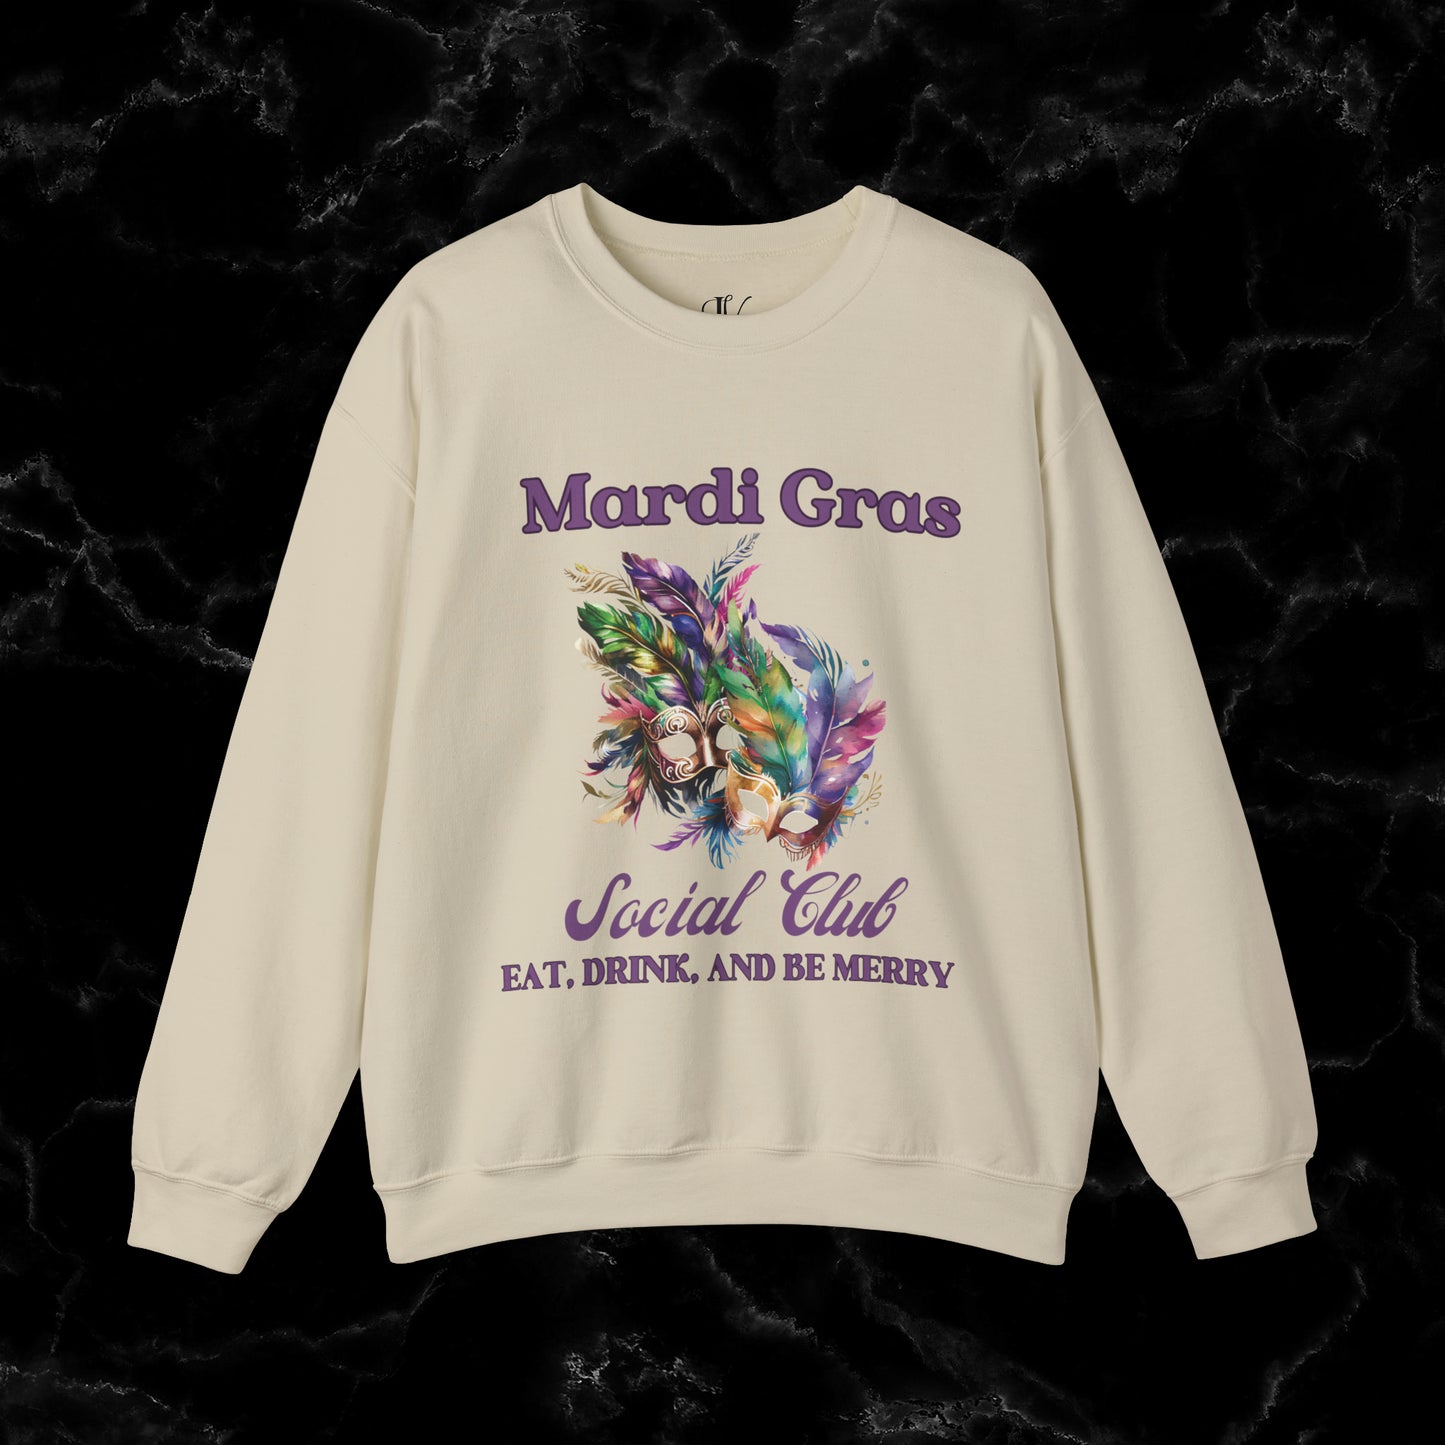 Mardi Gras Sweatshirt Women - NOLA Luxury Bachelorette Sweater, Unique Fat Tuesday Shirt, Louisiana Girls Trip Sweater, Mardi Gras Social Club Chic Sweatshirt S Sand 